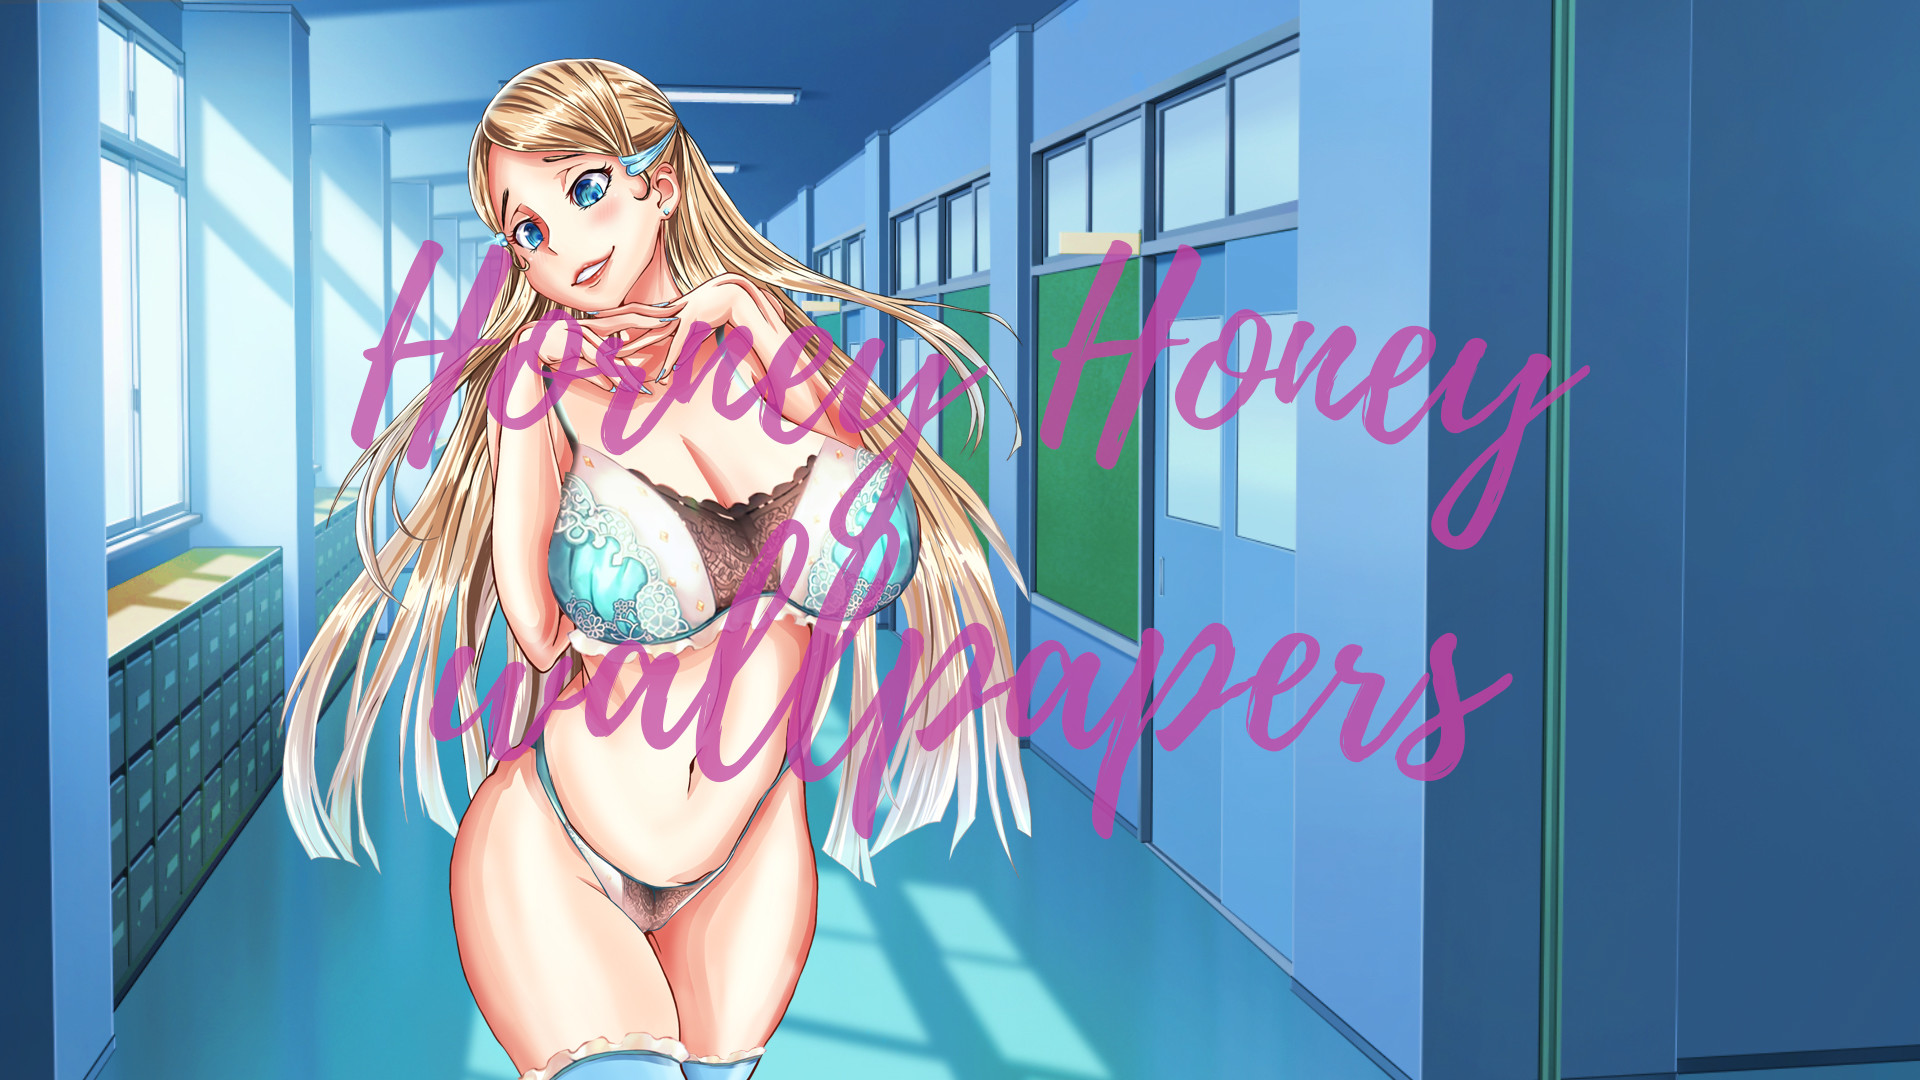 Horny Honey Wallpapers DLC Steam CD Key